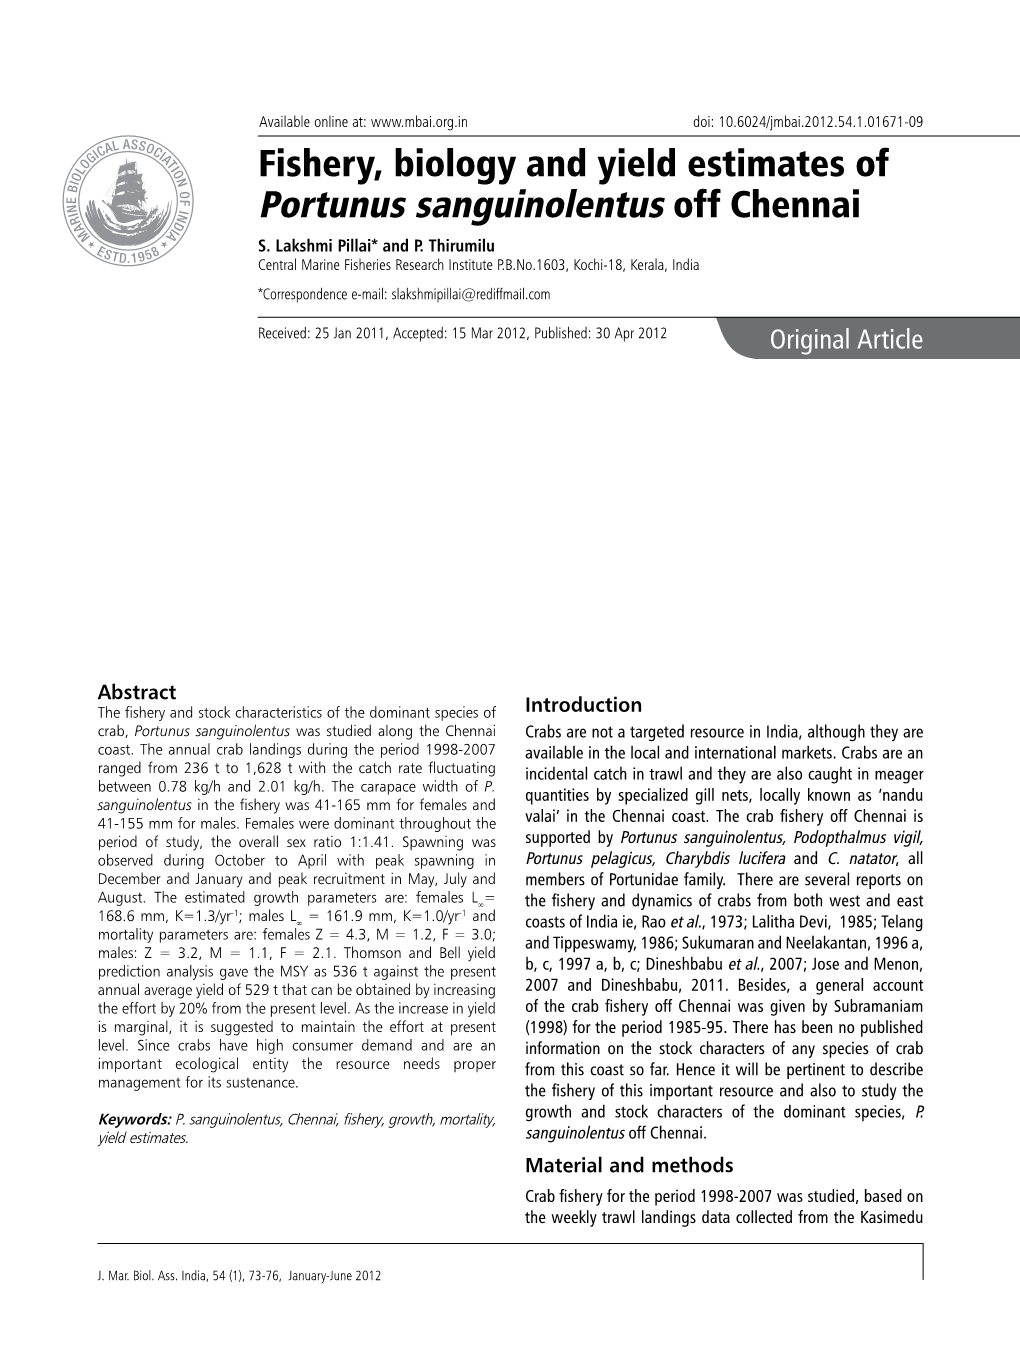 Fishery, Biology and Yield Estimates of Portunus Sanguinolentus Off Chennai S